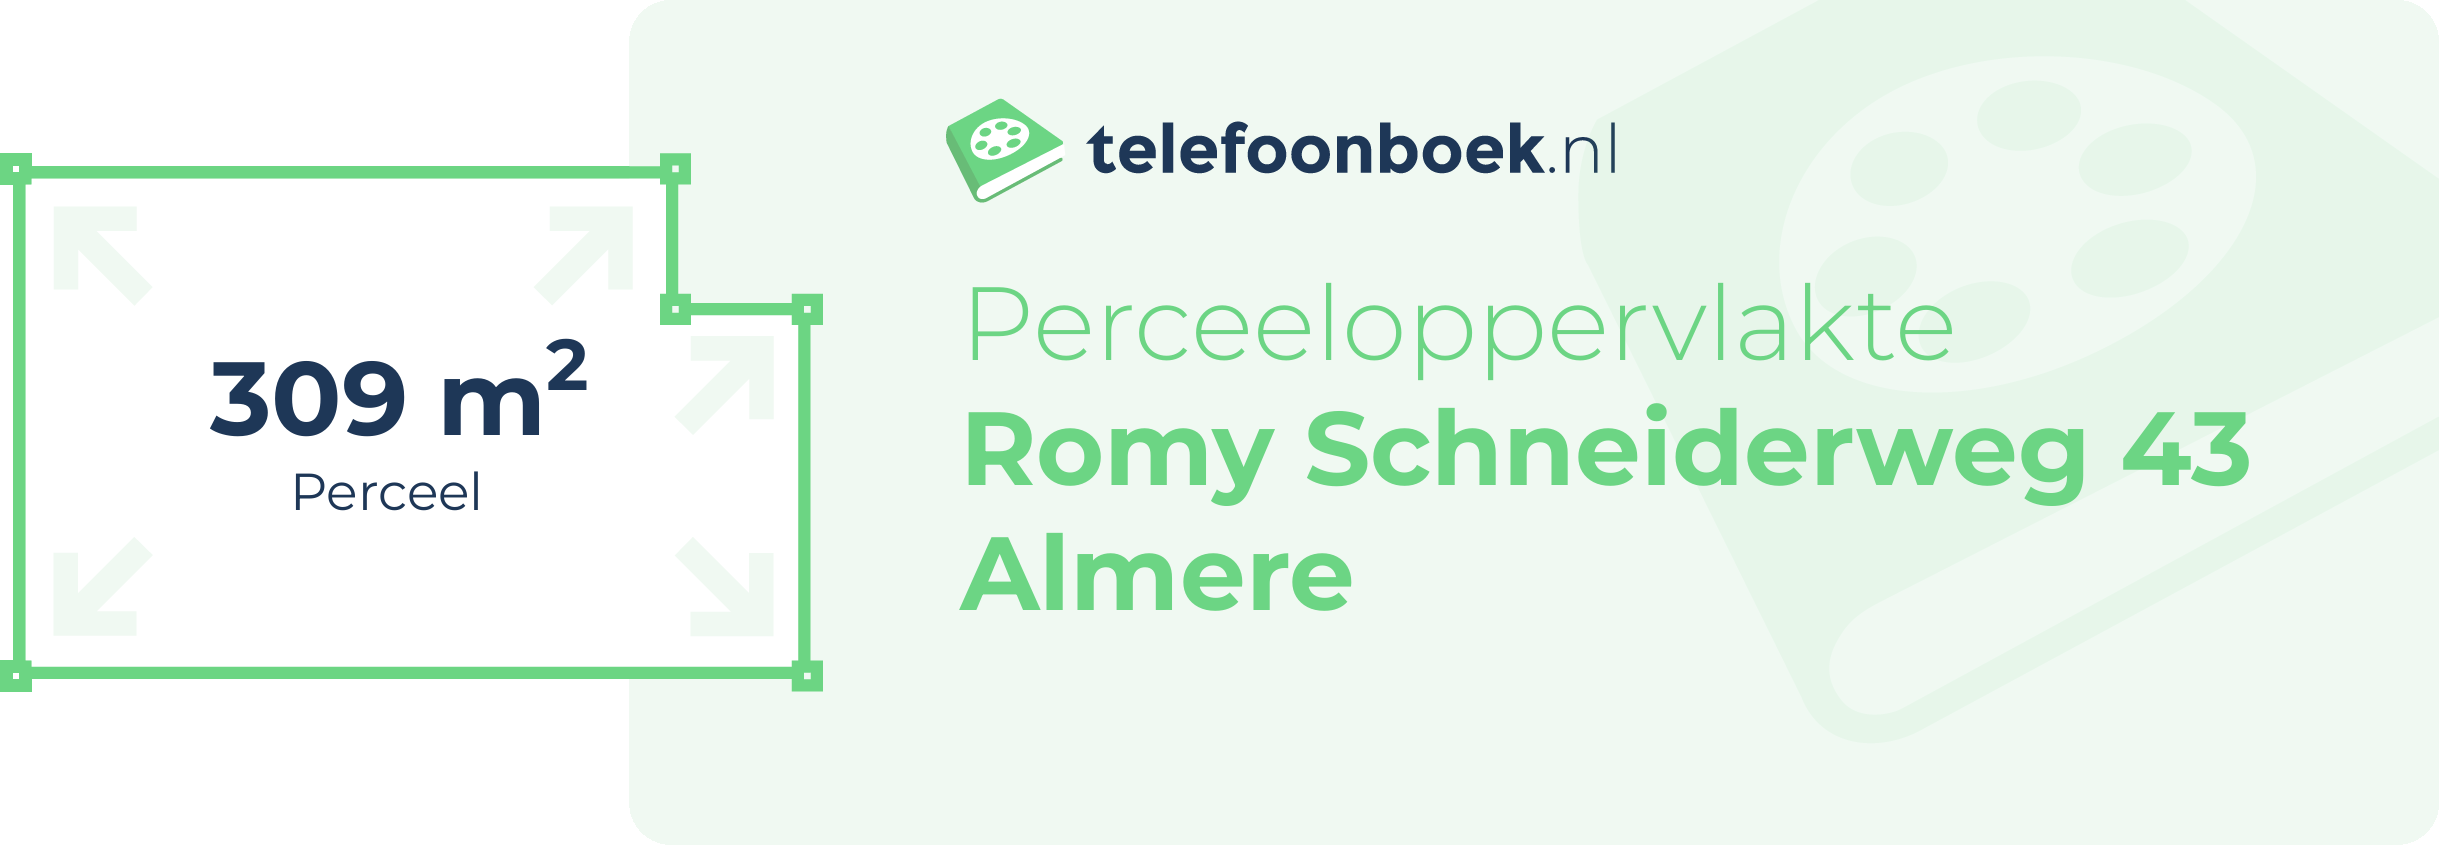 Perceeloppervlakte Romy Schneiderweg 43 Almere